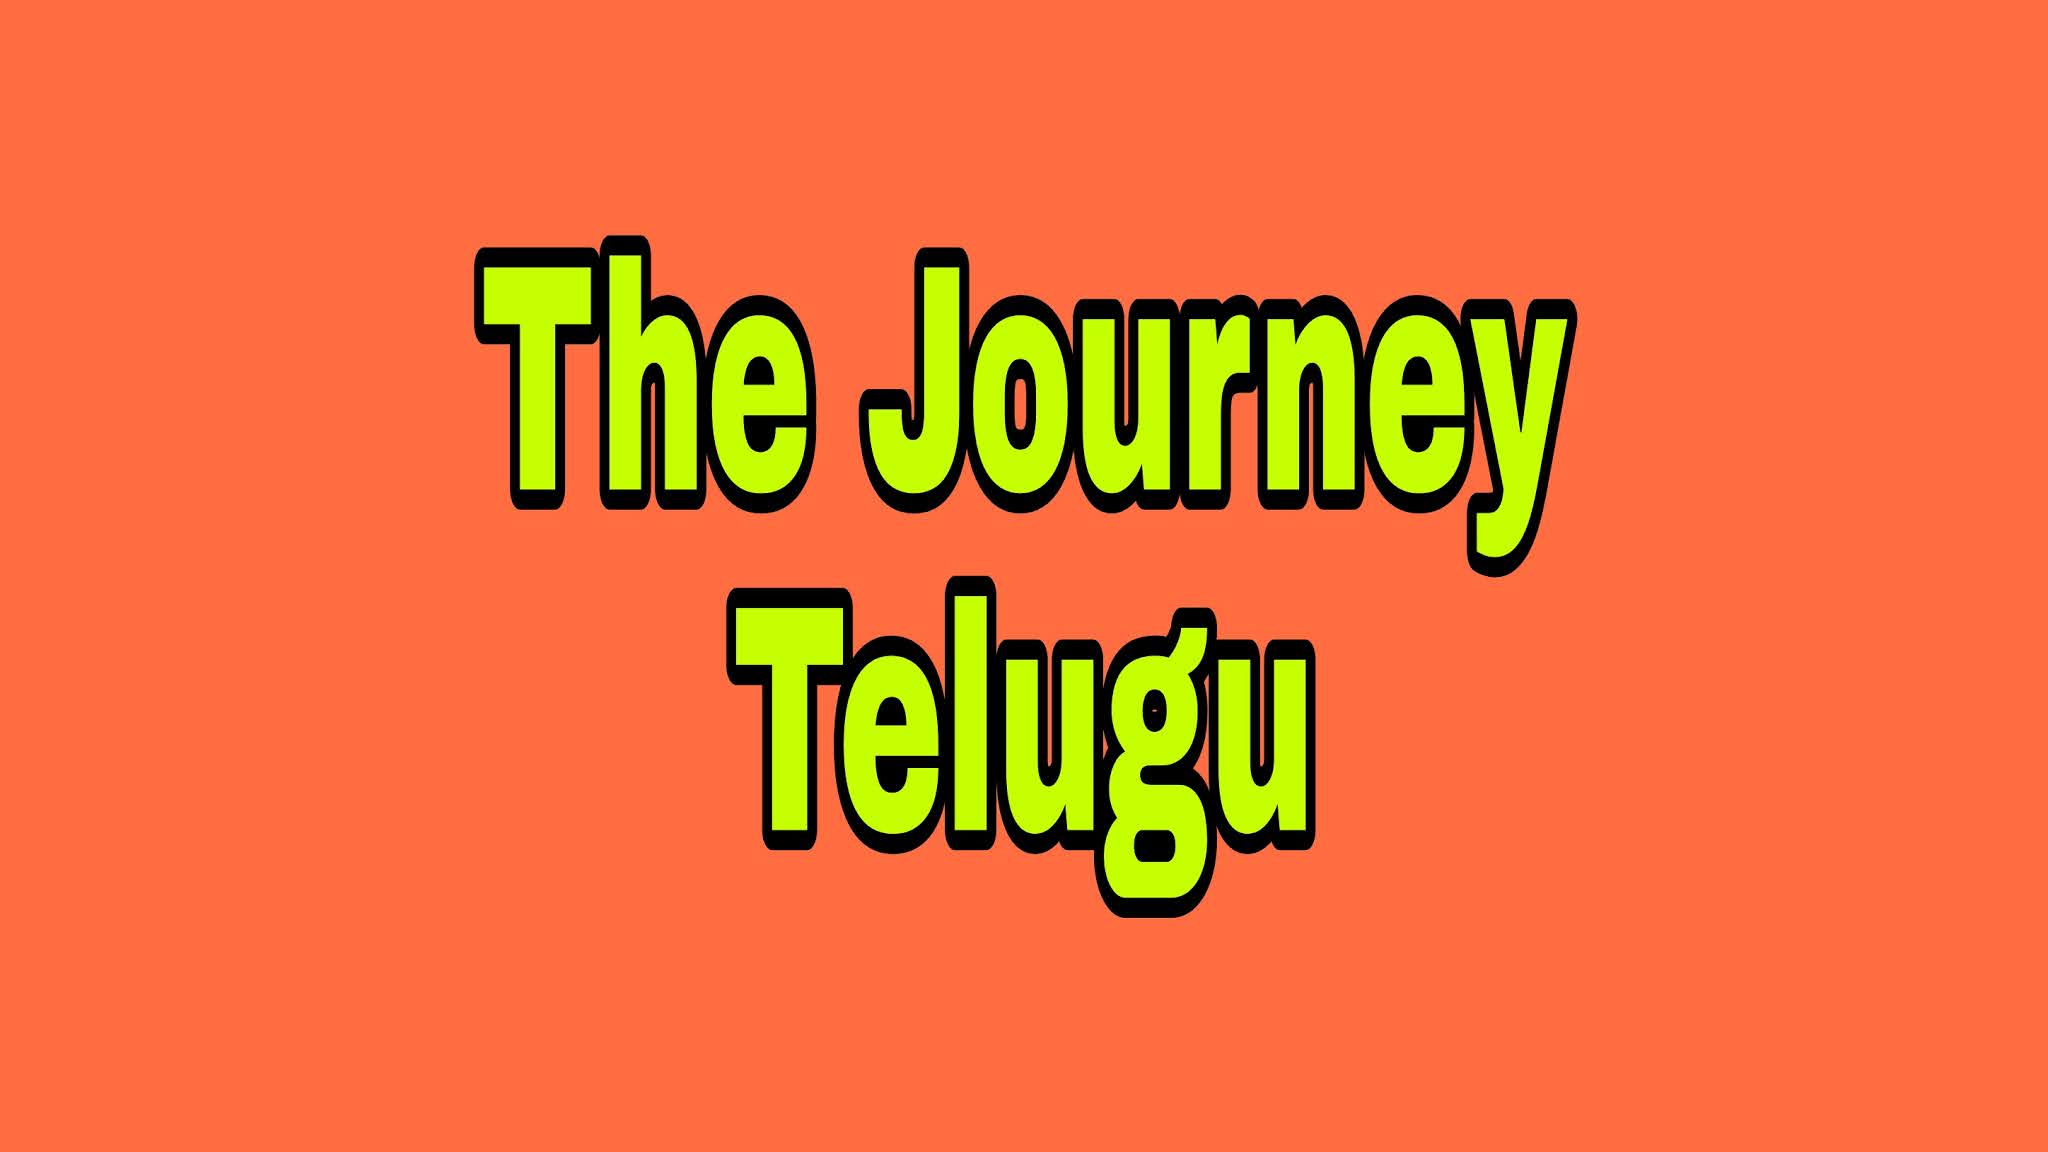 safe journey meaning in telugu